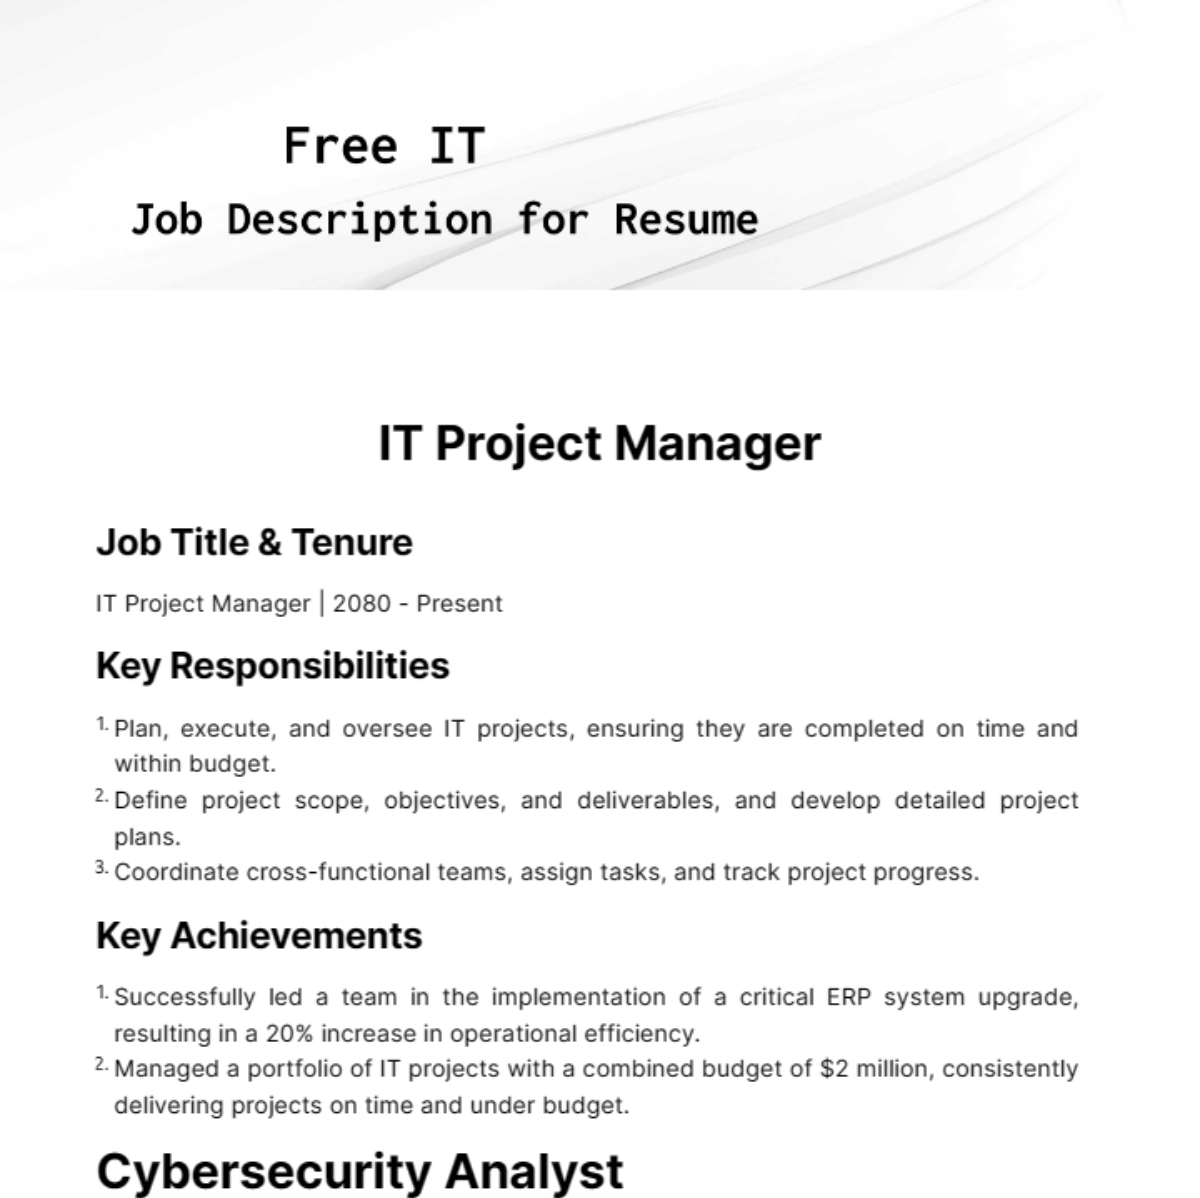 IT Job Description for Resume Template